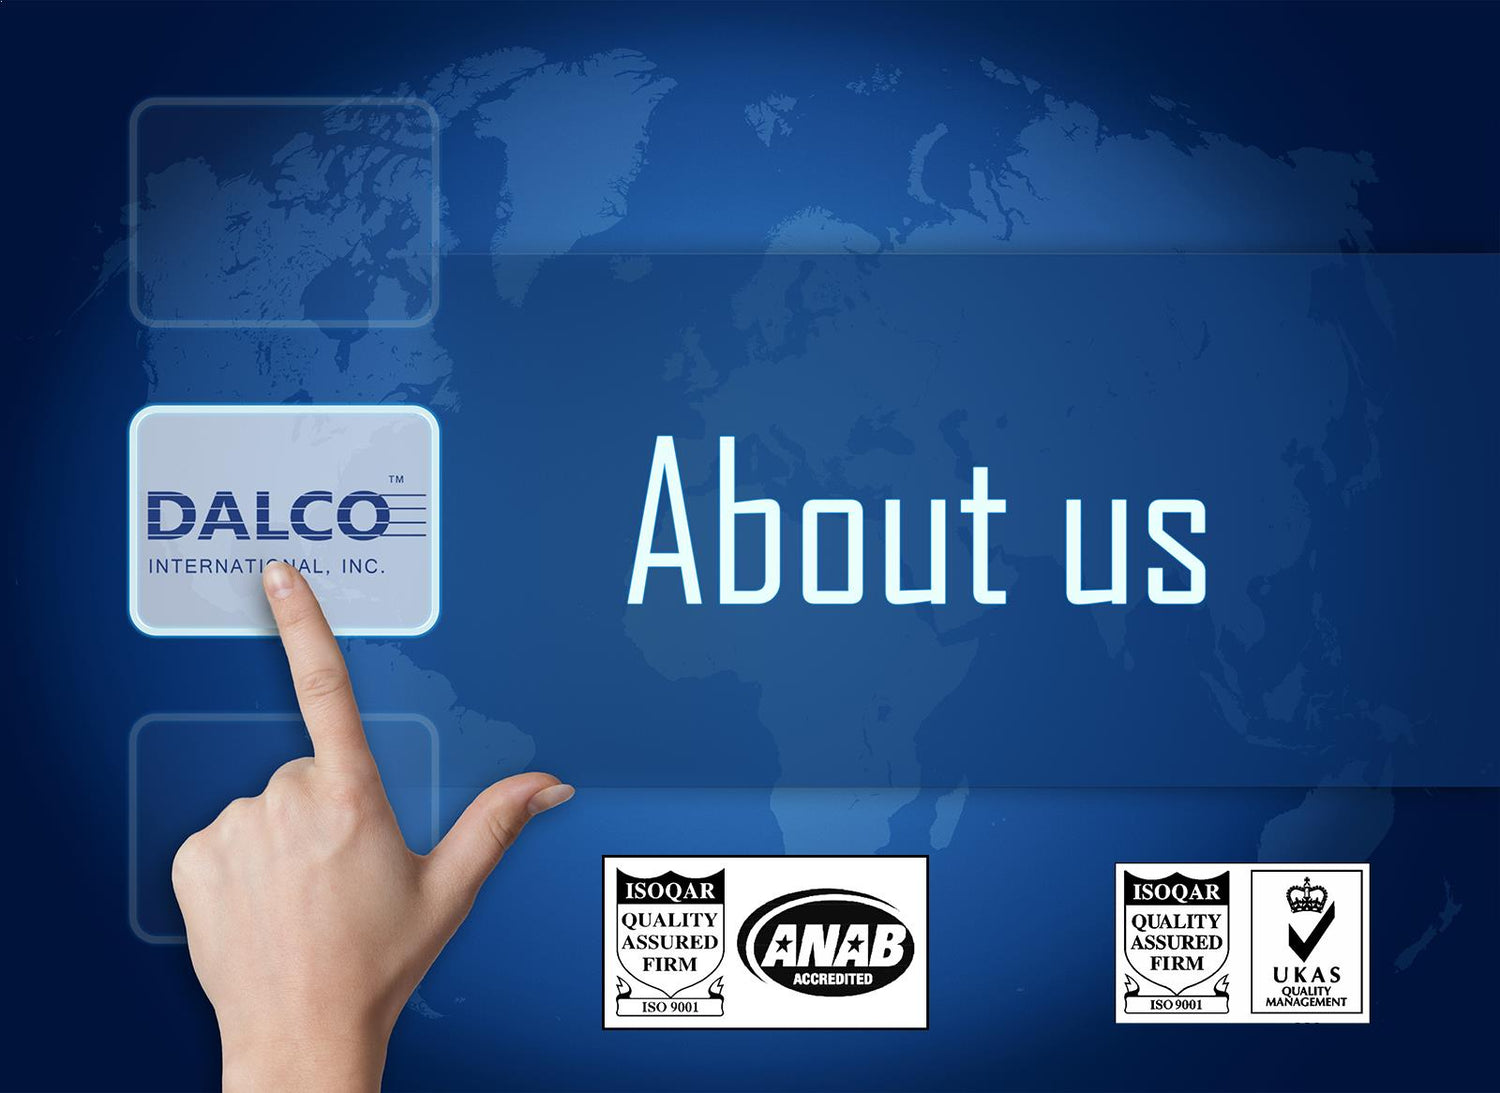 About Dalco International